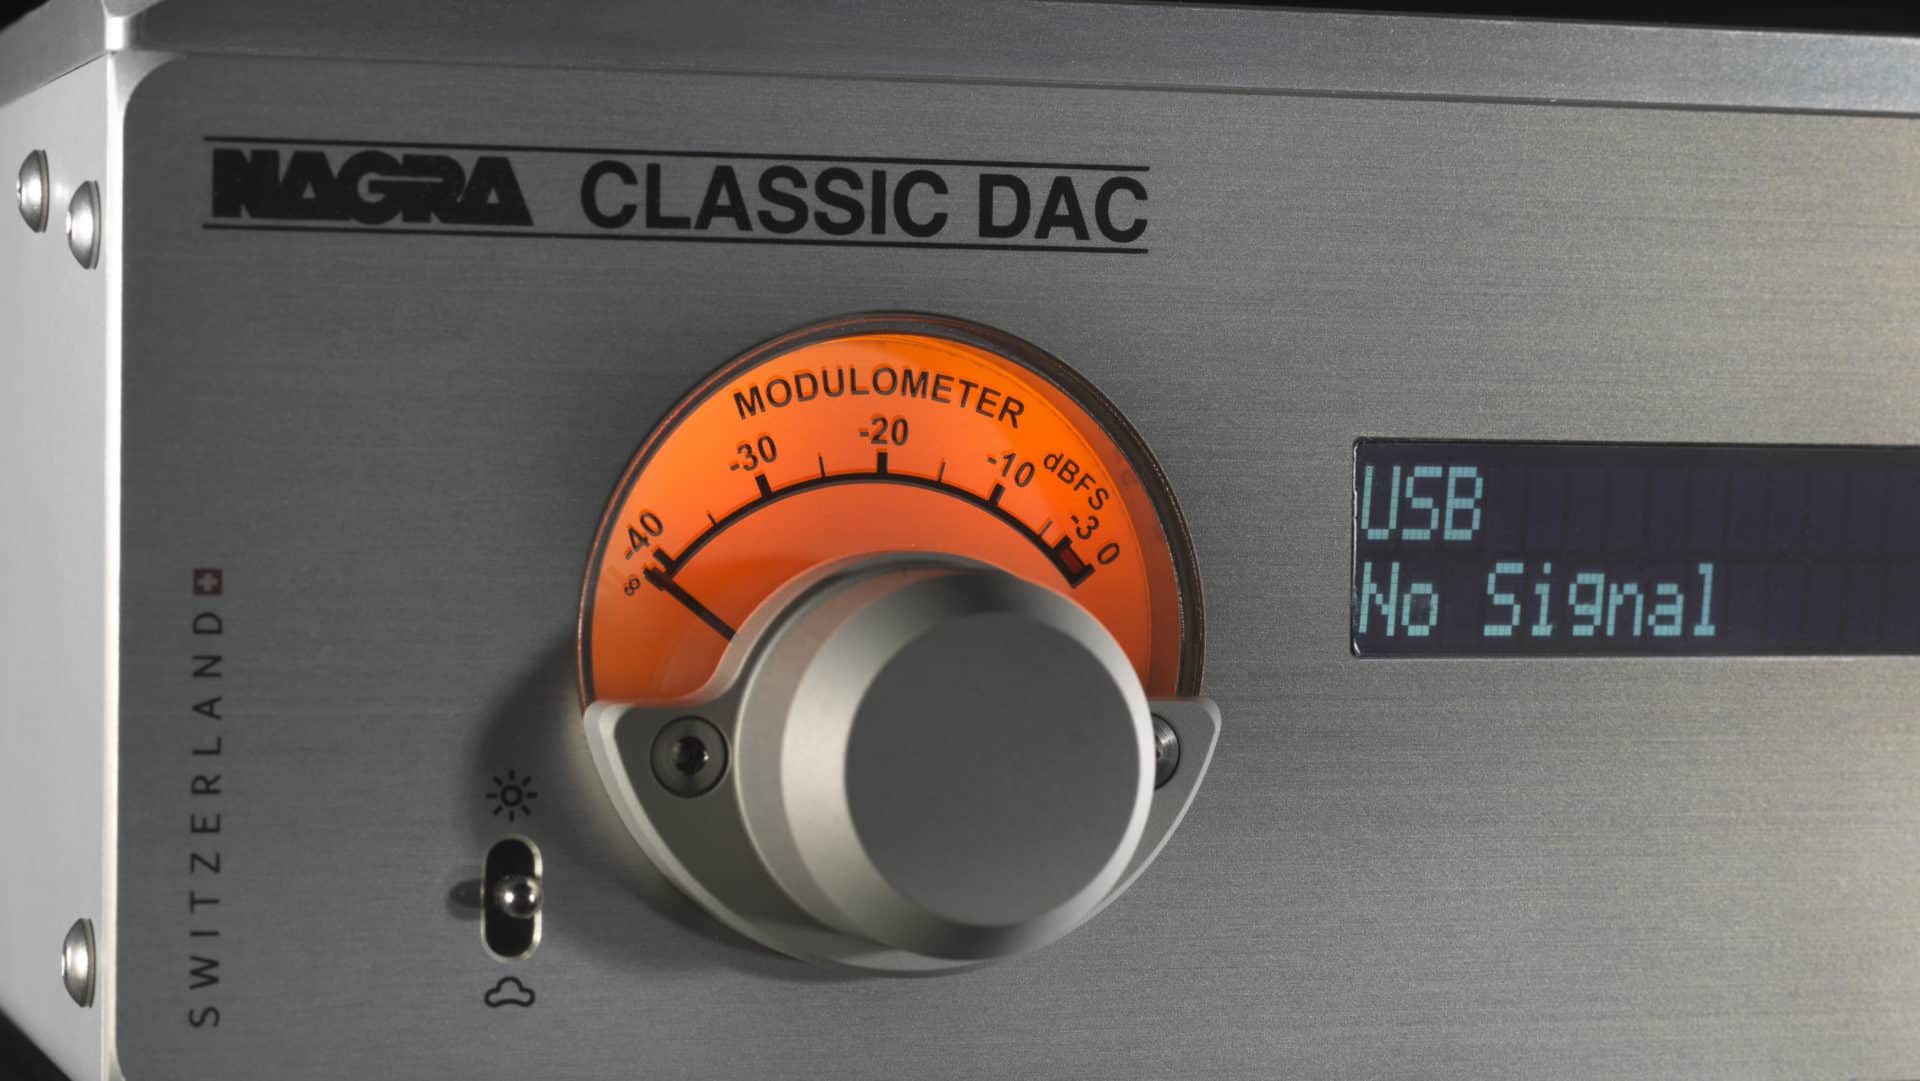 Nagra Classic DAC II digital analog converter roon tested